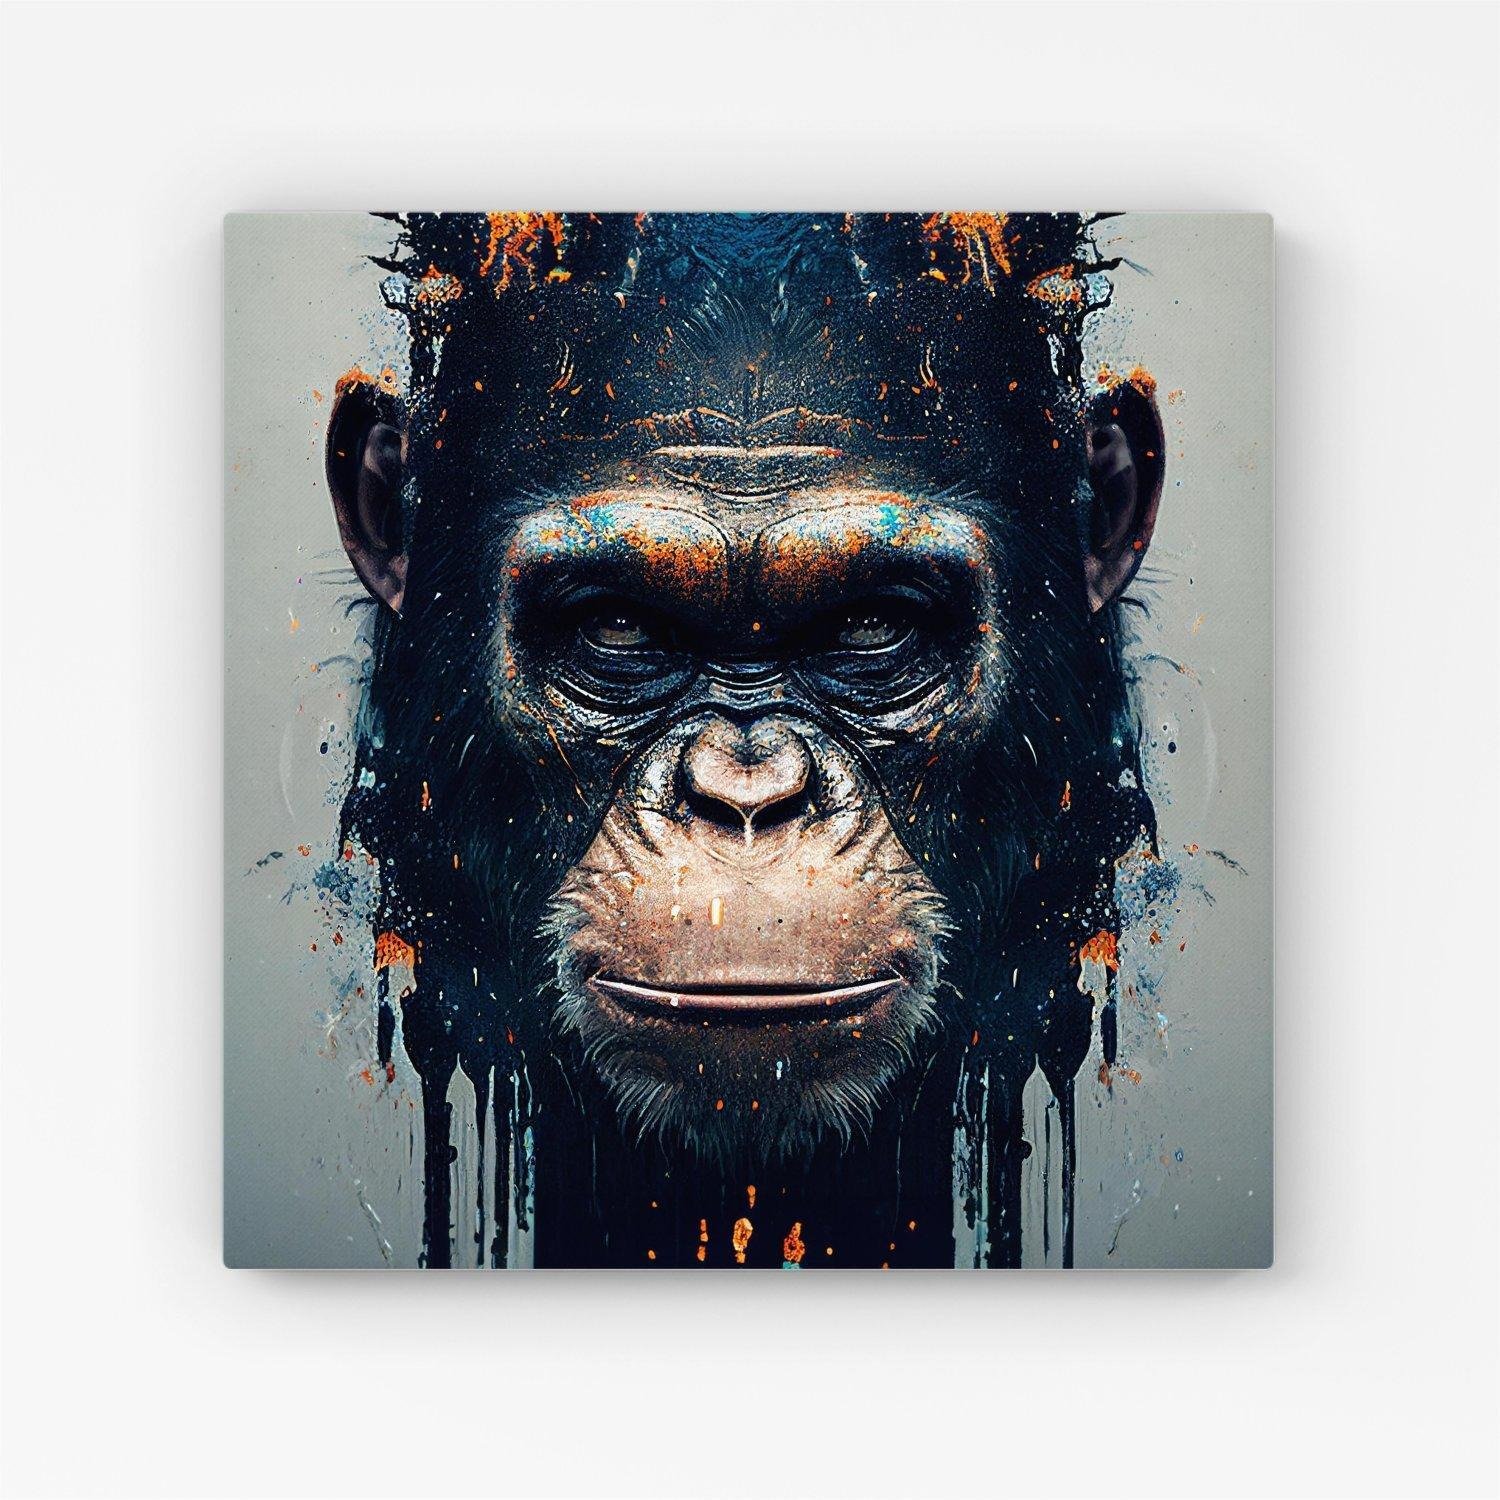 Gorilla Face Splashart Canvas - image 1